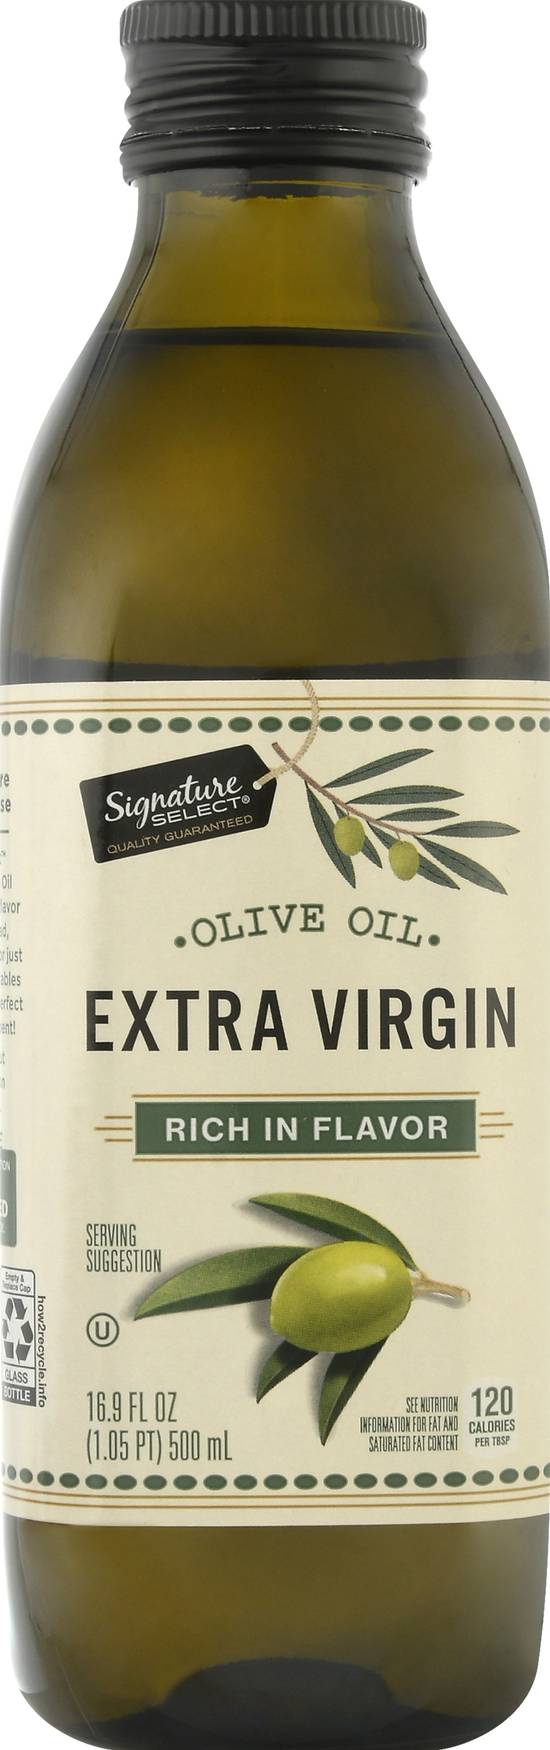 Signature Select Extra Virgin Olive Oil (16.9 fl oz)